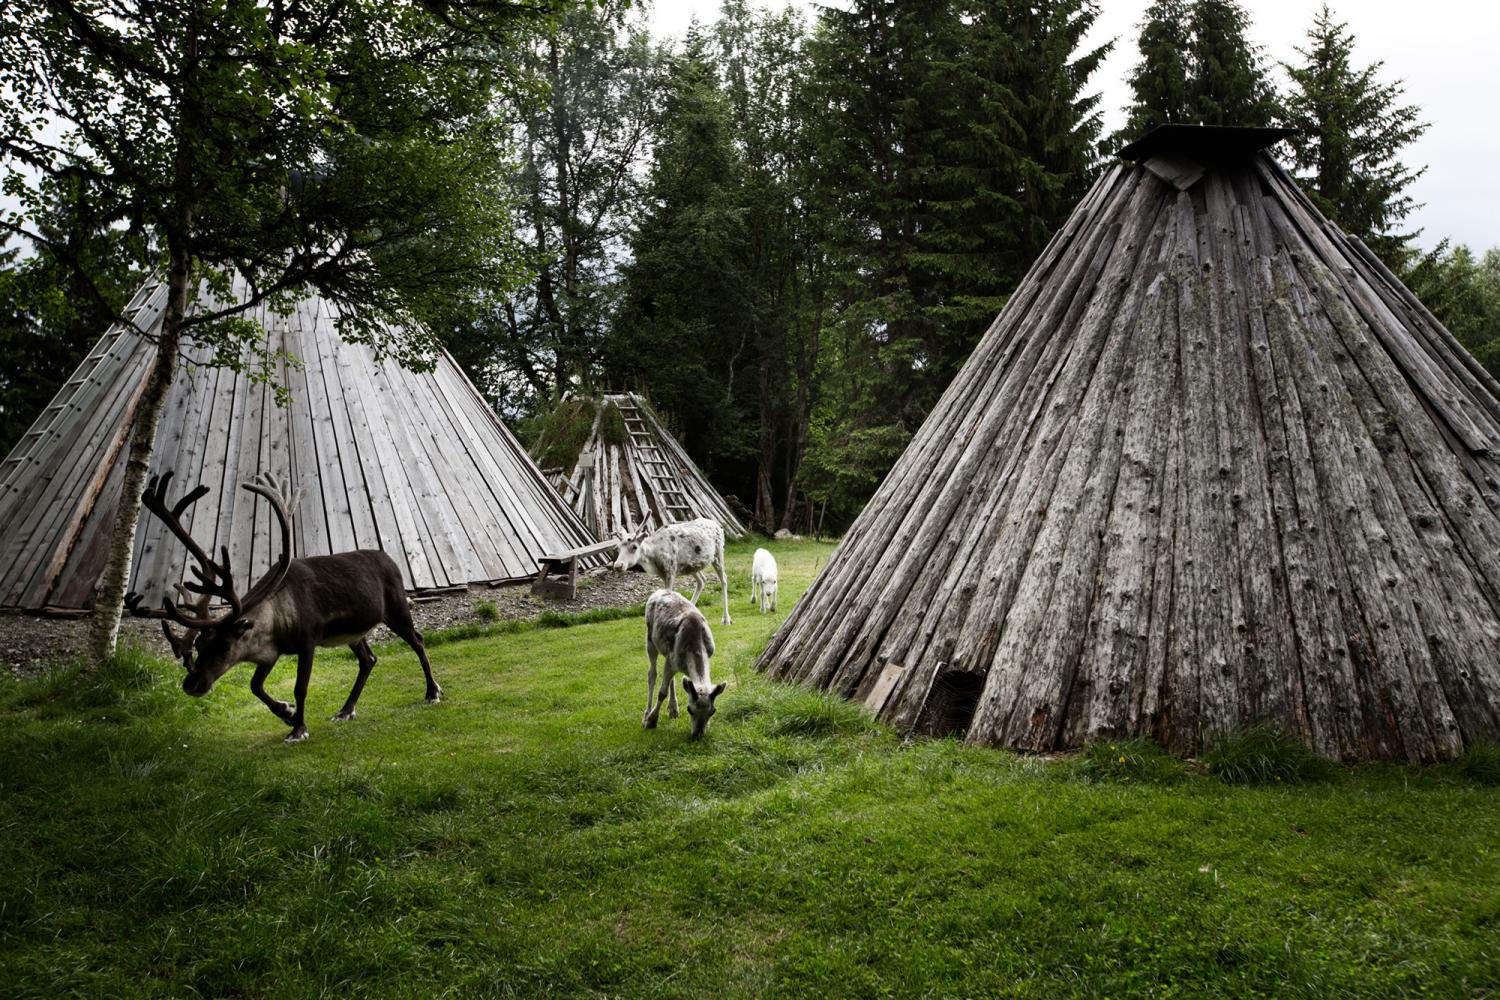 Njarka Sami camp is situated on a peninsular in Lake Häggsjön, Jämtland